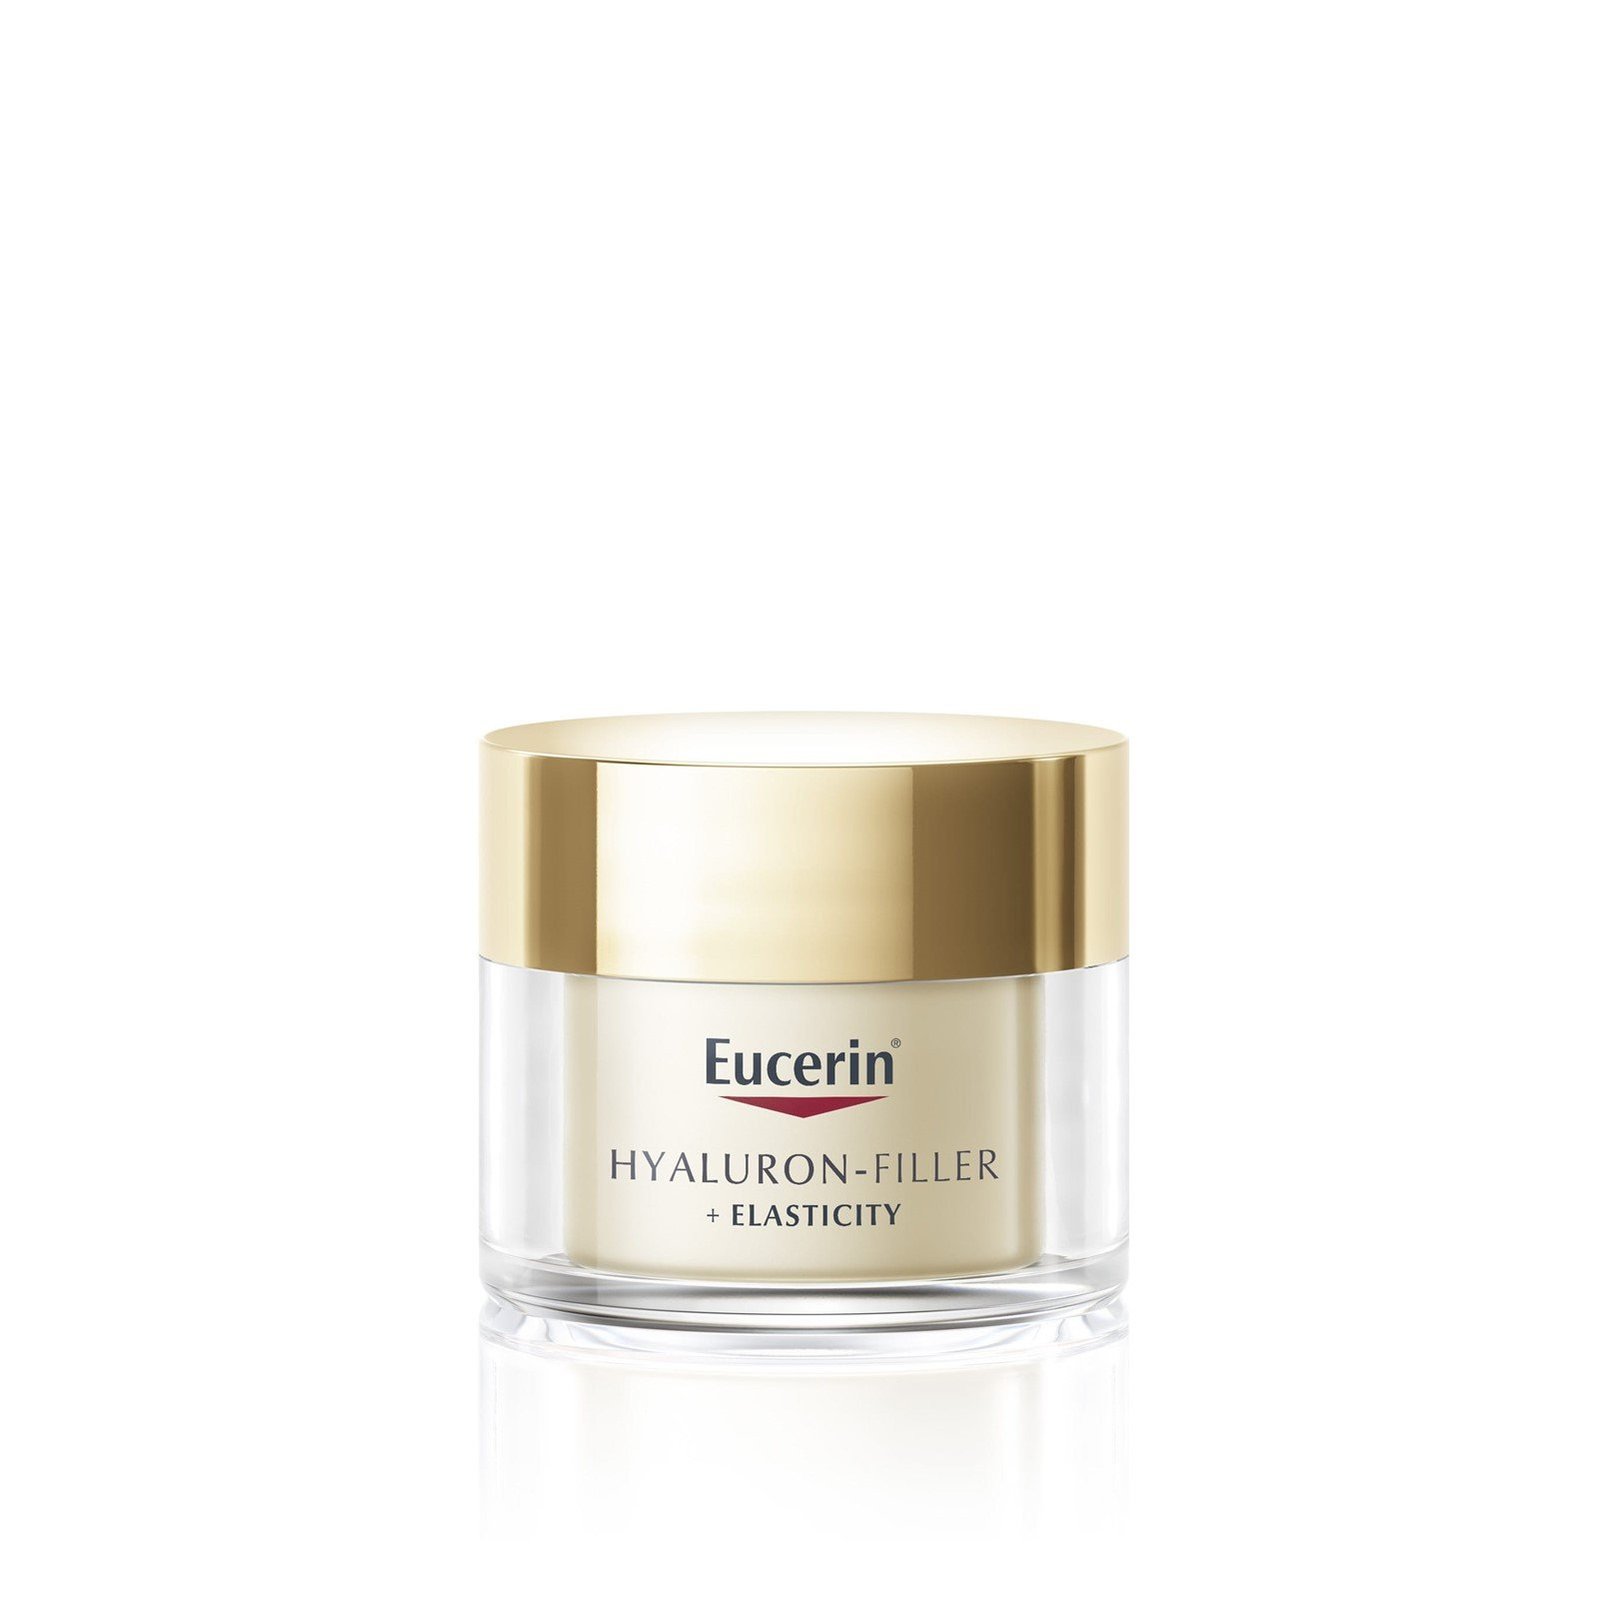 Eucerin Hyaluron-Filler + Elasticity Day Cream 50ml